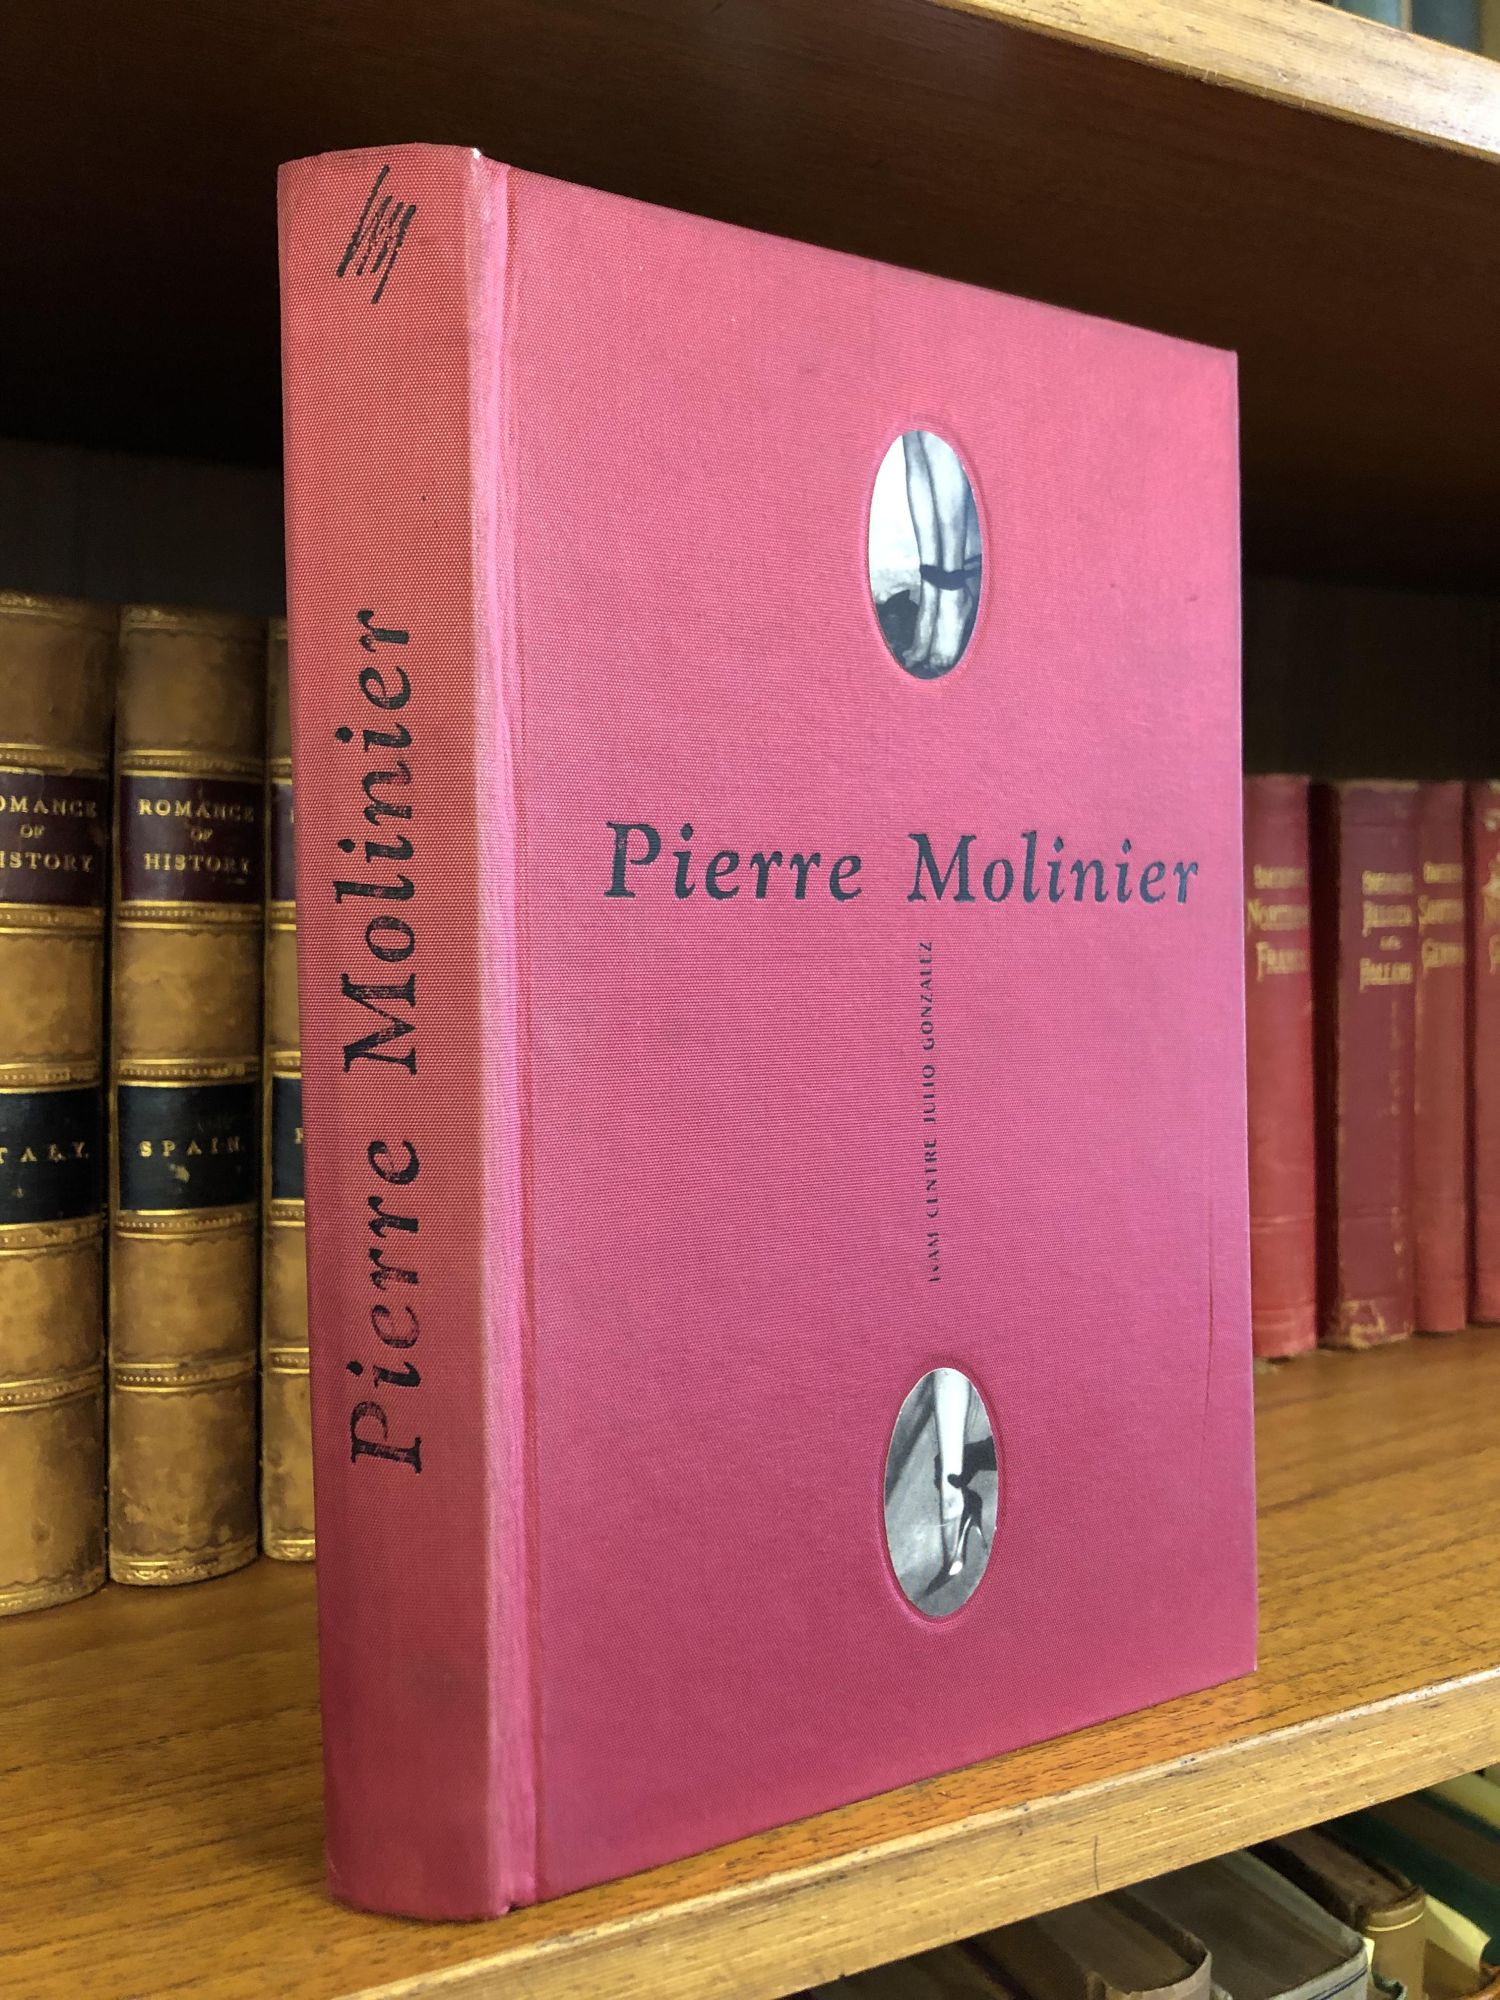 PIERRE MOLINIER | Pierre Molinier, Juan Manuel Bonet | First 